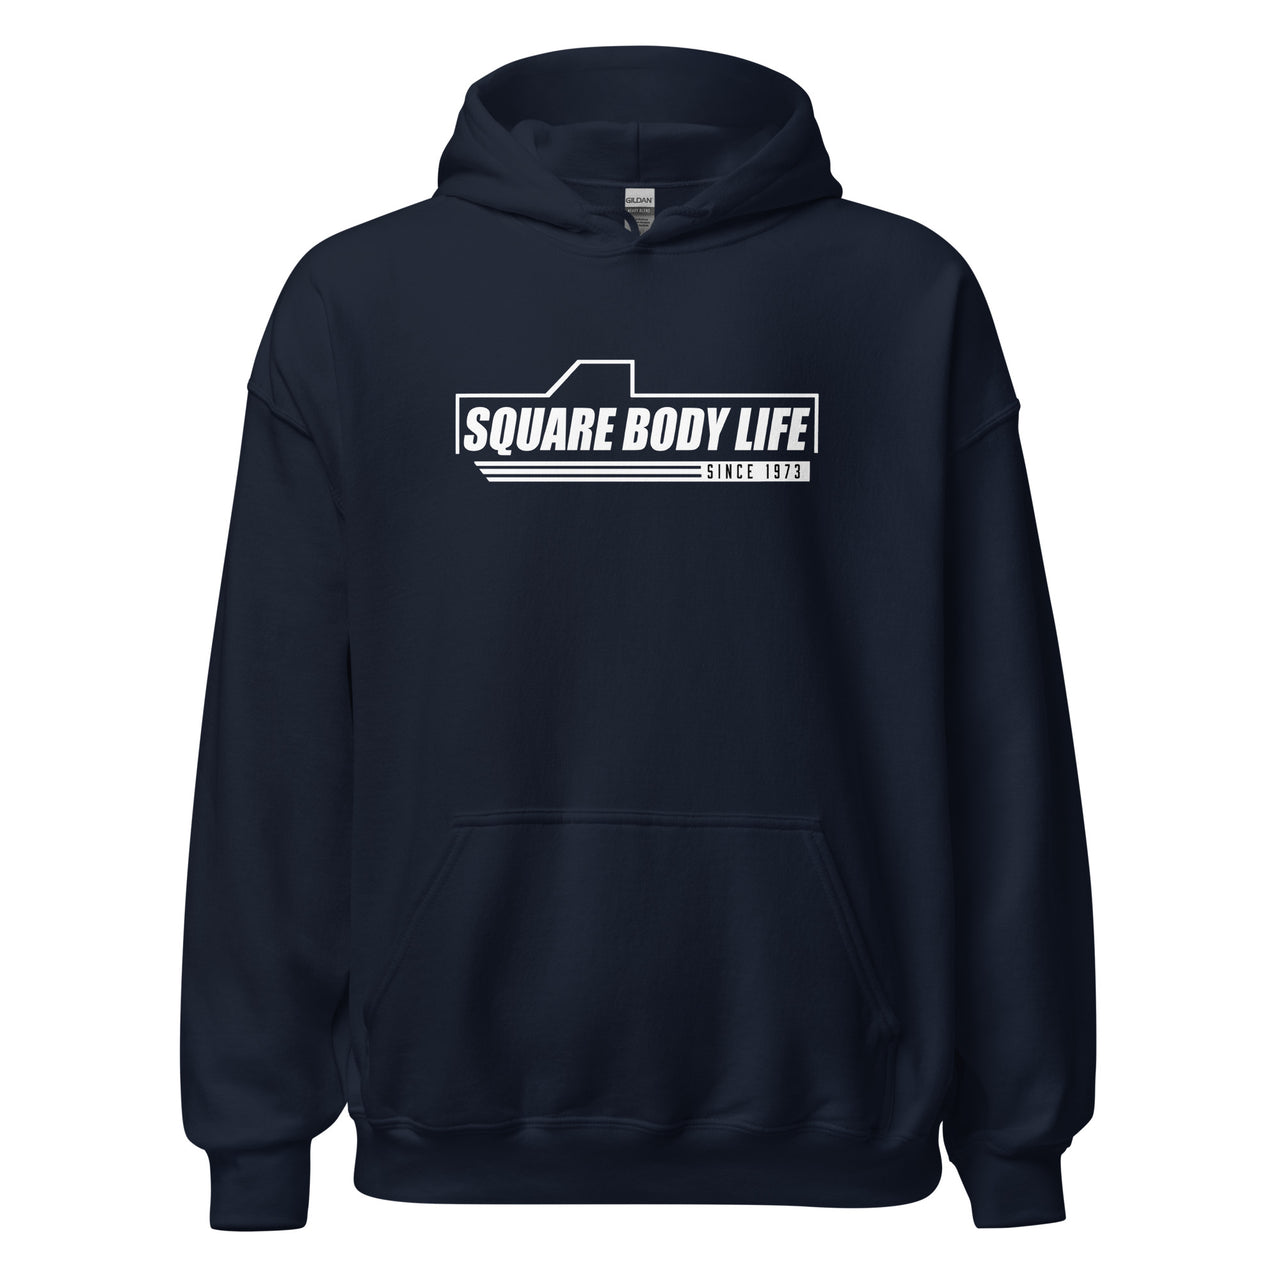 Square Body Life Hoodie Squarebody Truck Sweatshirt in navy